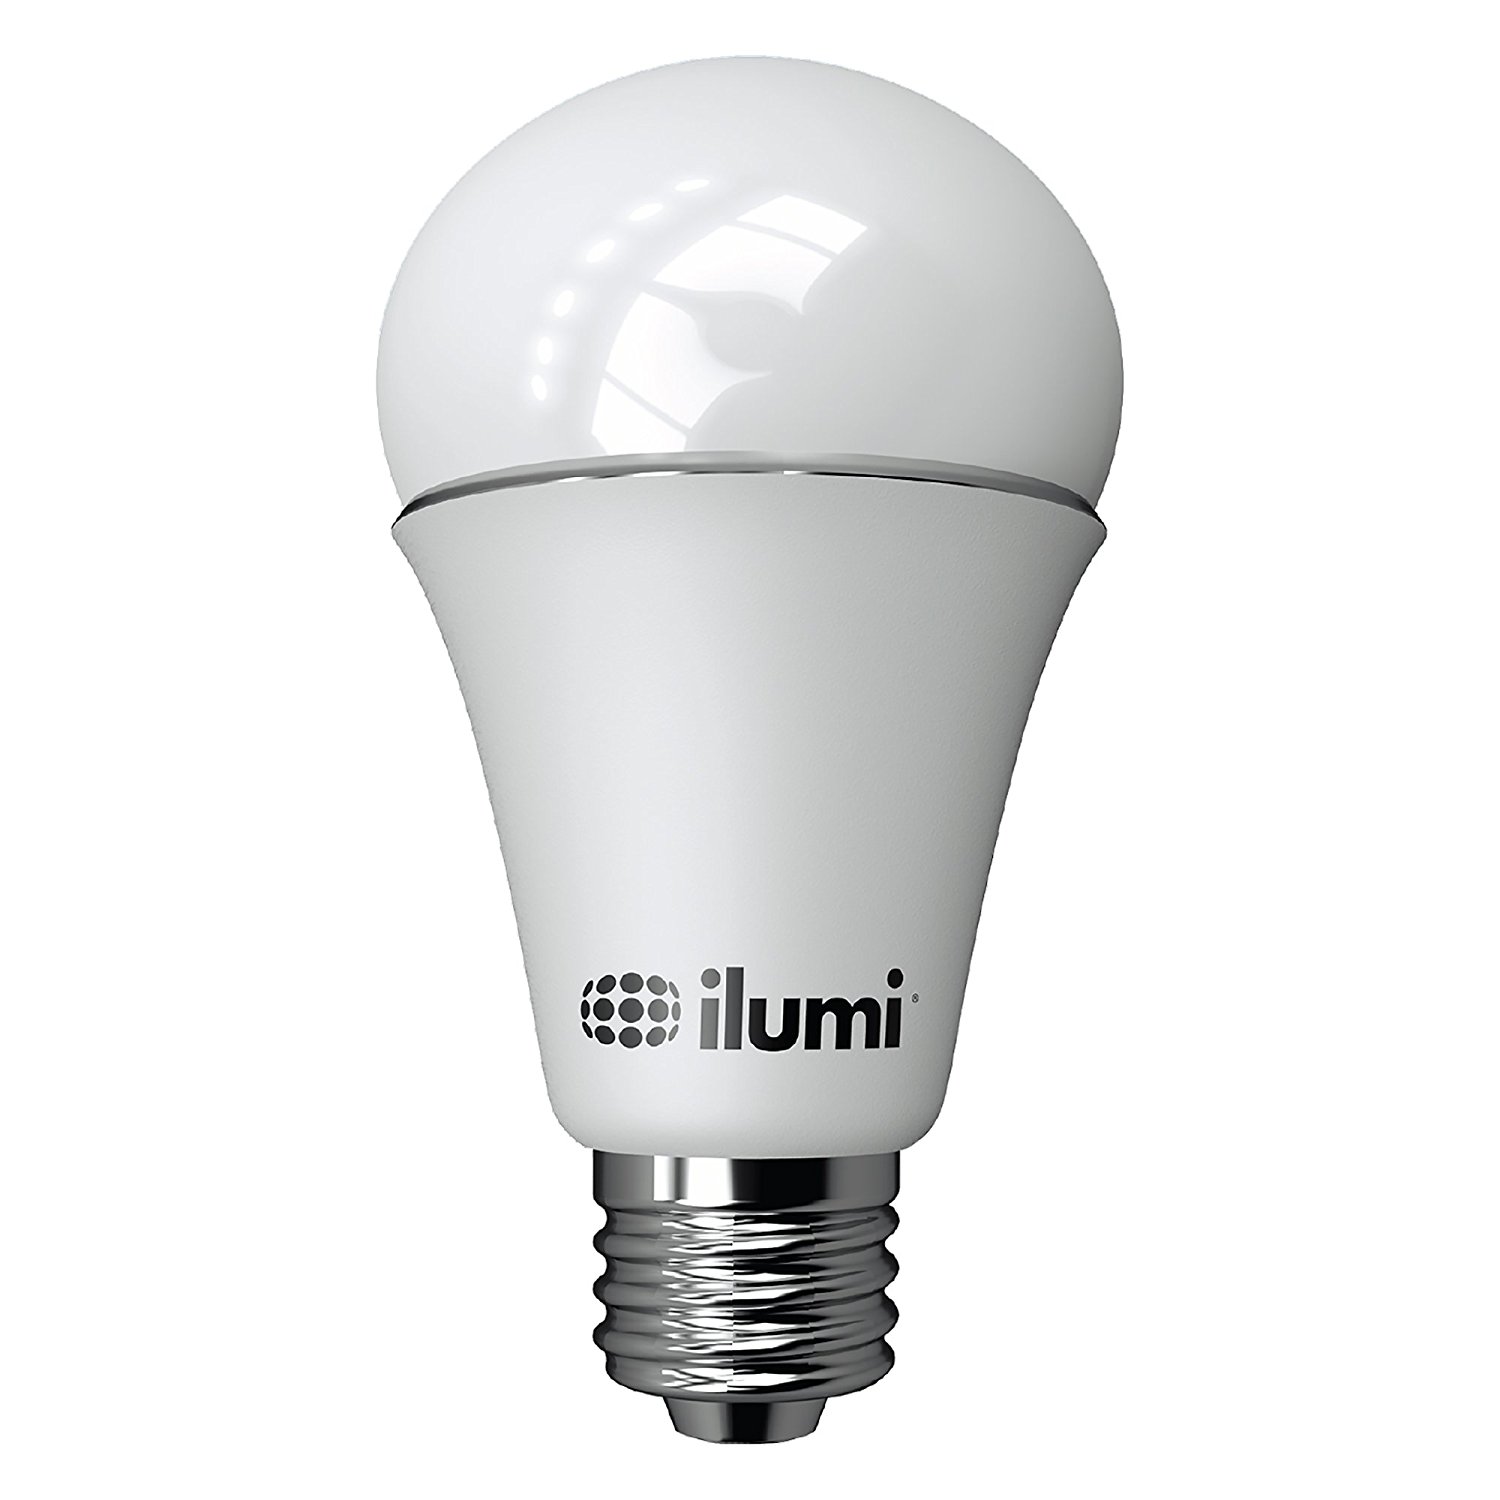 ilumi Bluetooth Smart LED A19 Light Bulb, 2nd Generation ...